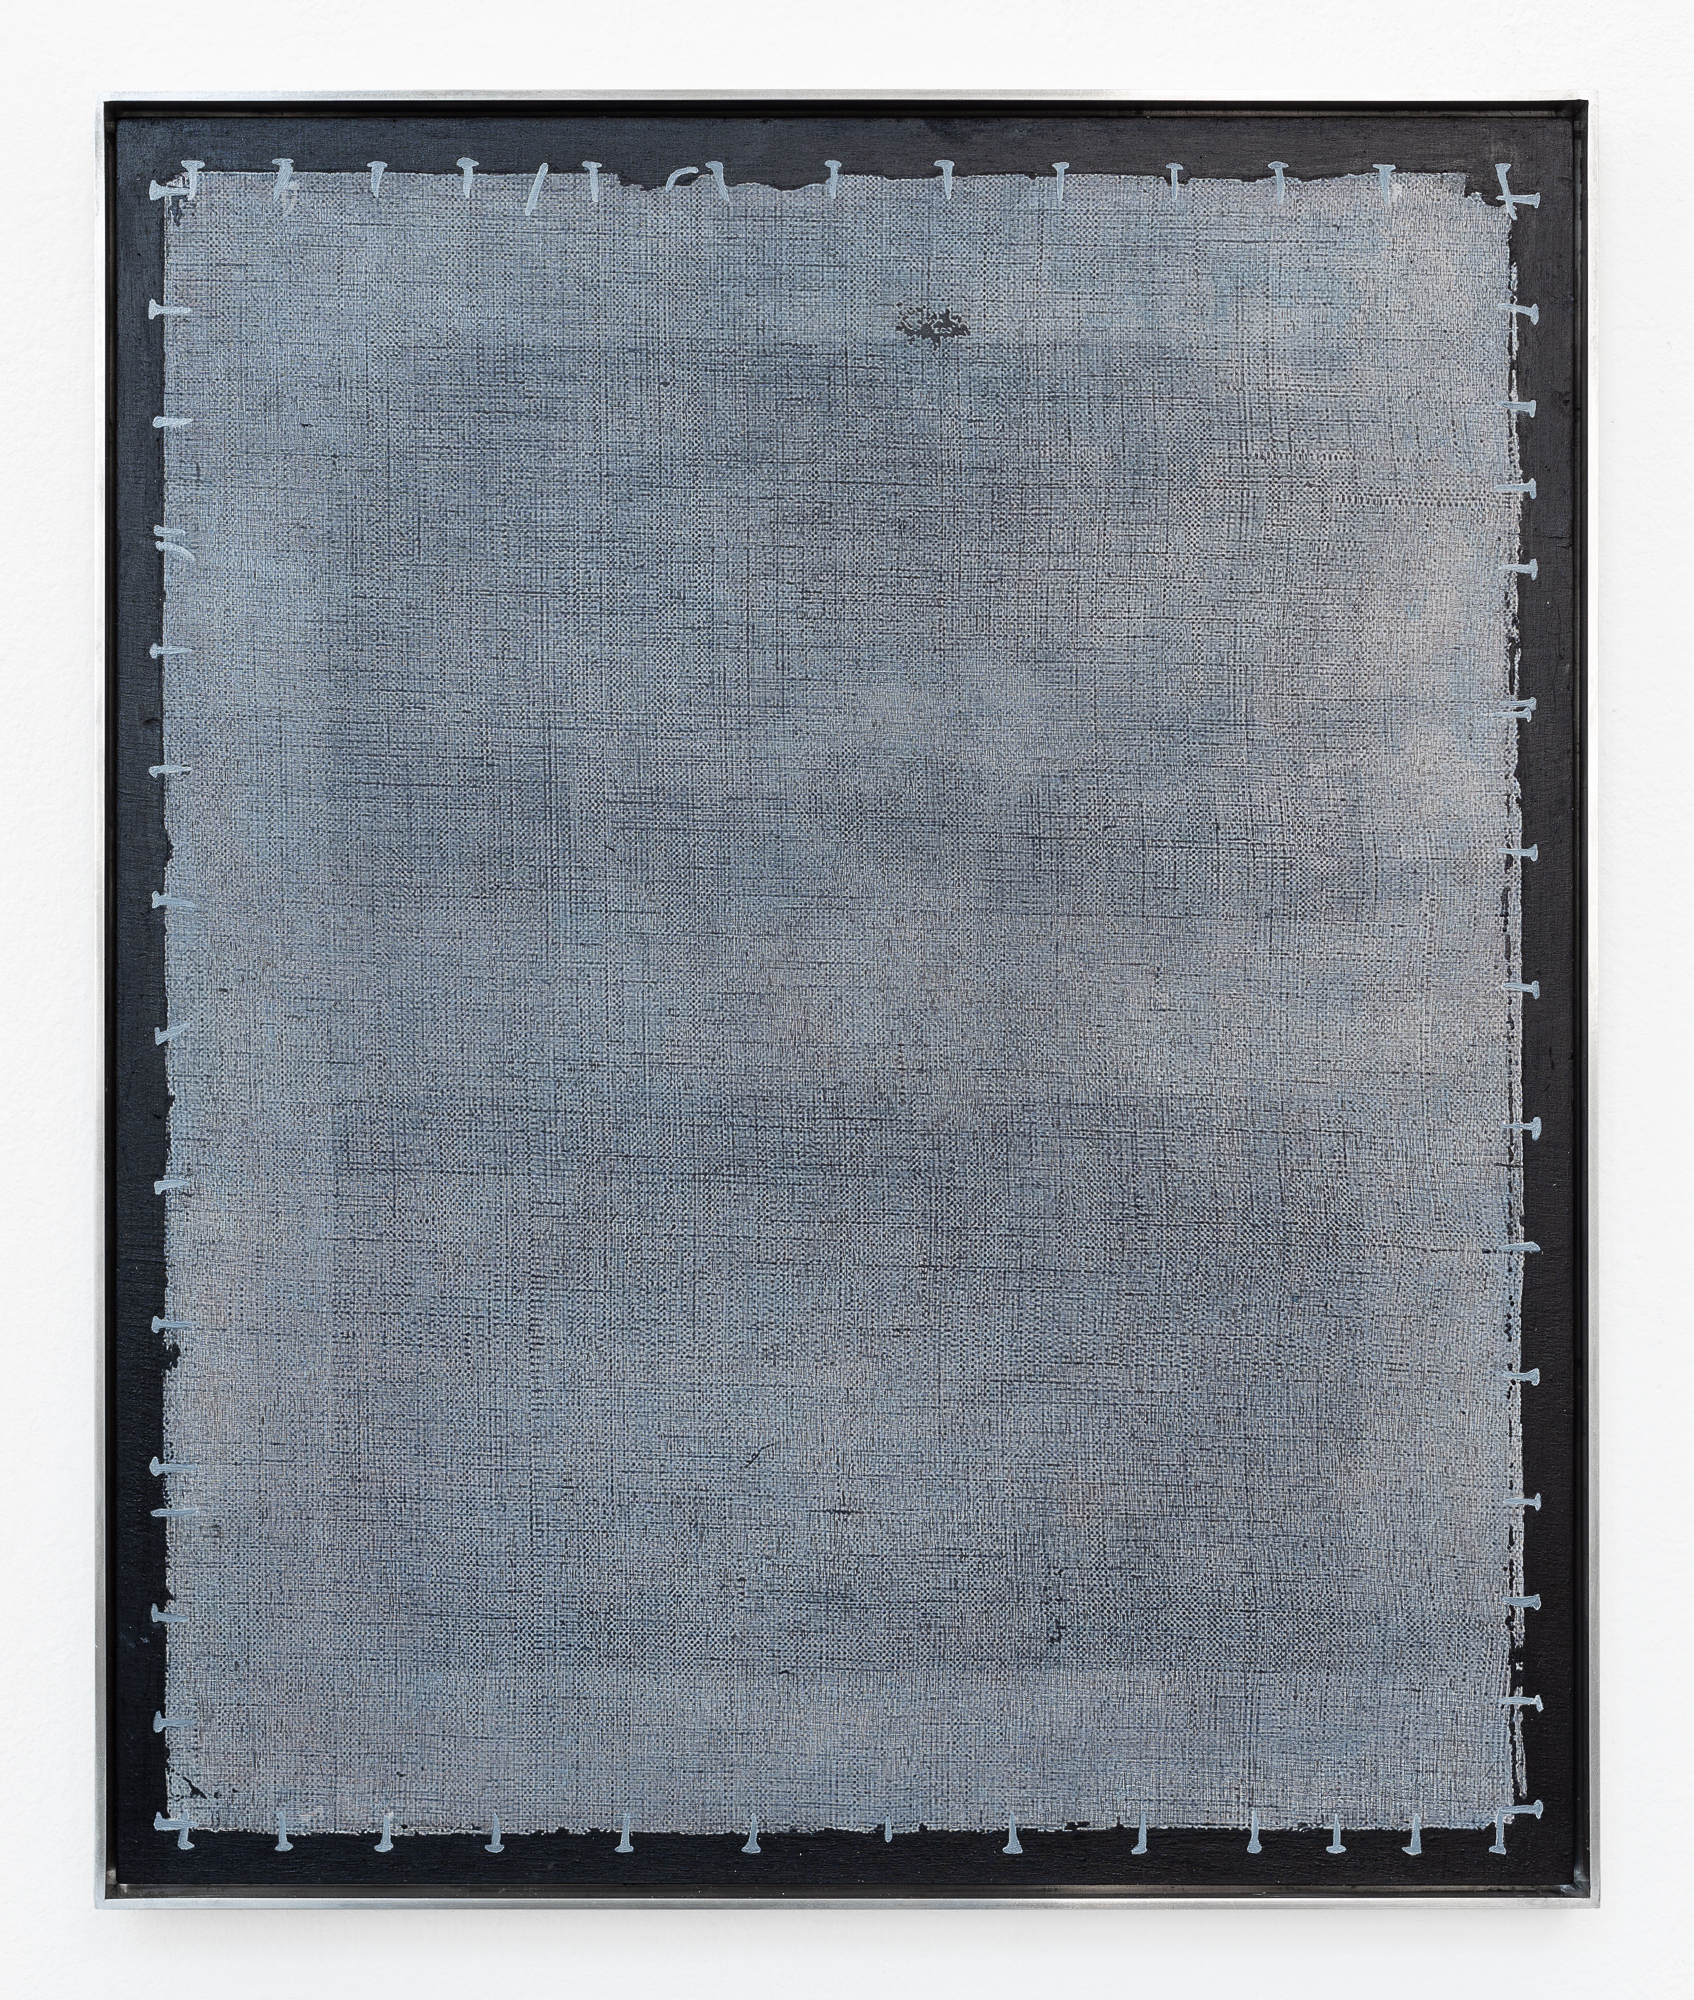 Johanna Tiedtke, aus der Serie "Flora", UV-Print, Öl auf Holz, 46 x 38 cm 2021